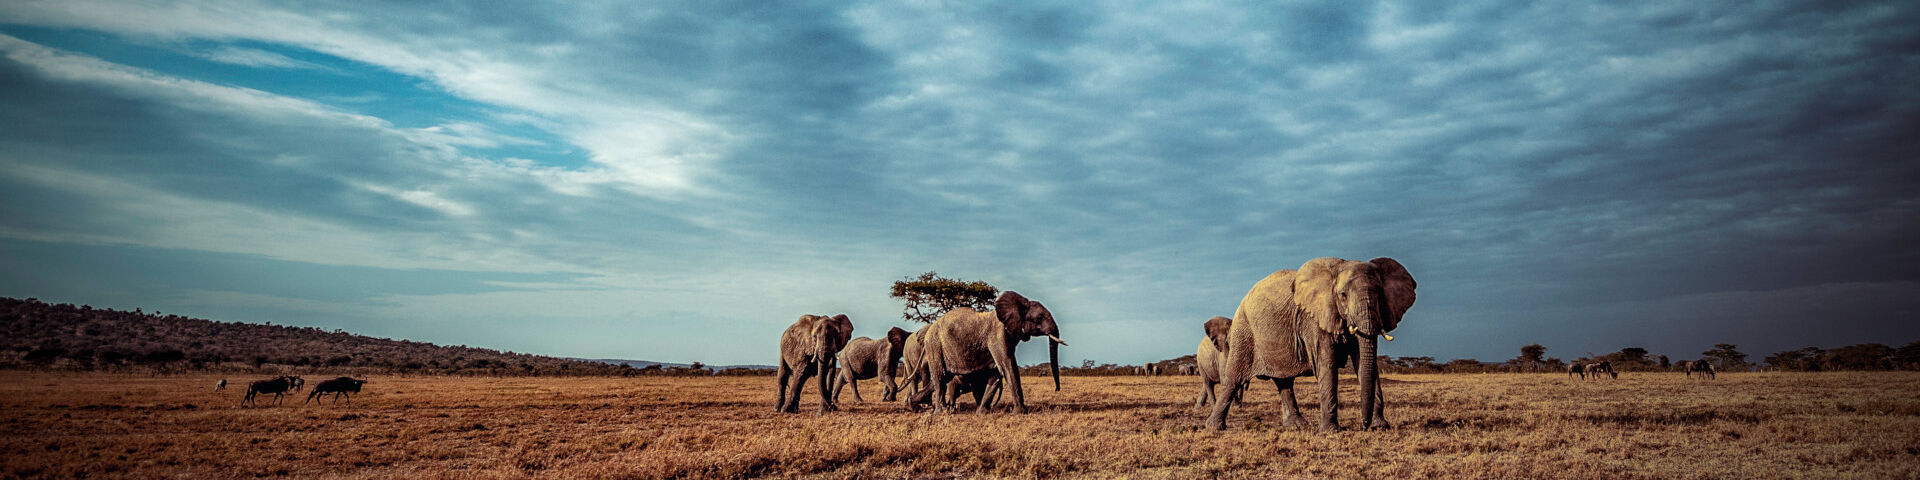 When to Visit Kenya Elephants on the Plains